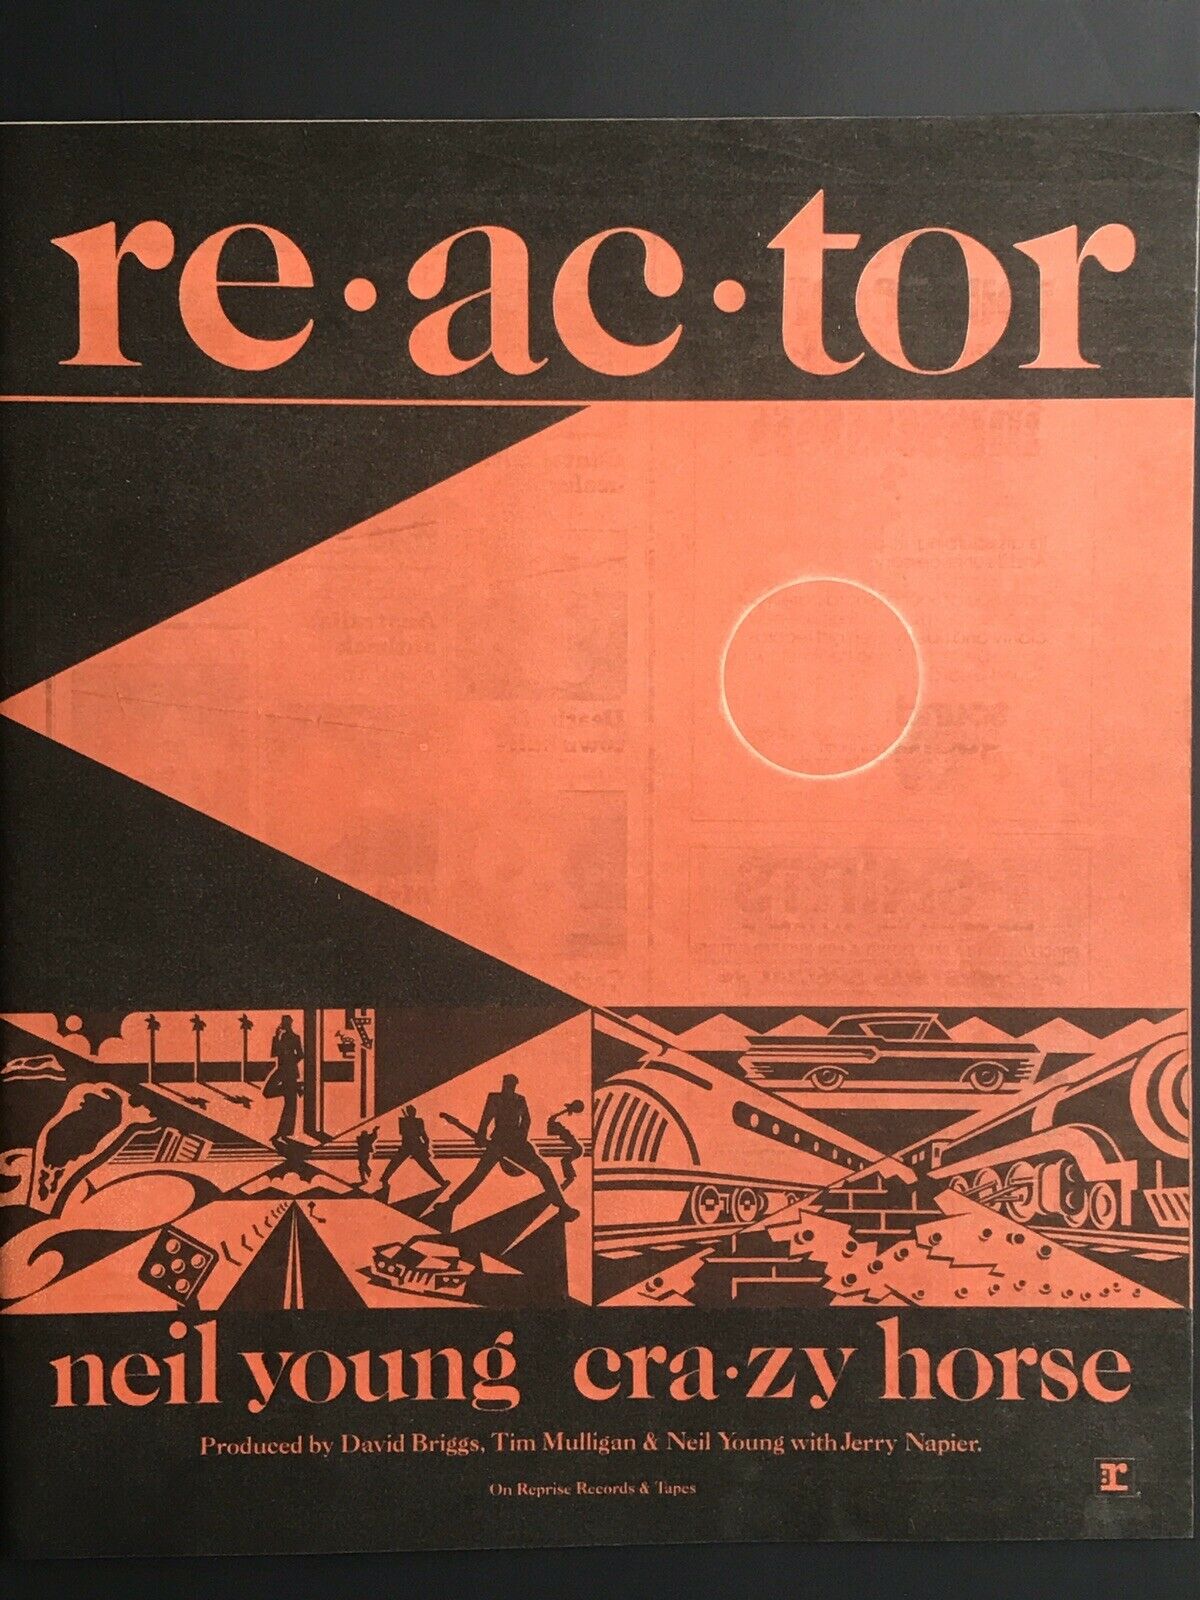 1981 Vtg Neil Young & Crazy Horse "reactor" Album Promo Print Ad 26.7x31.8cm Rsm